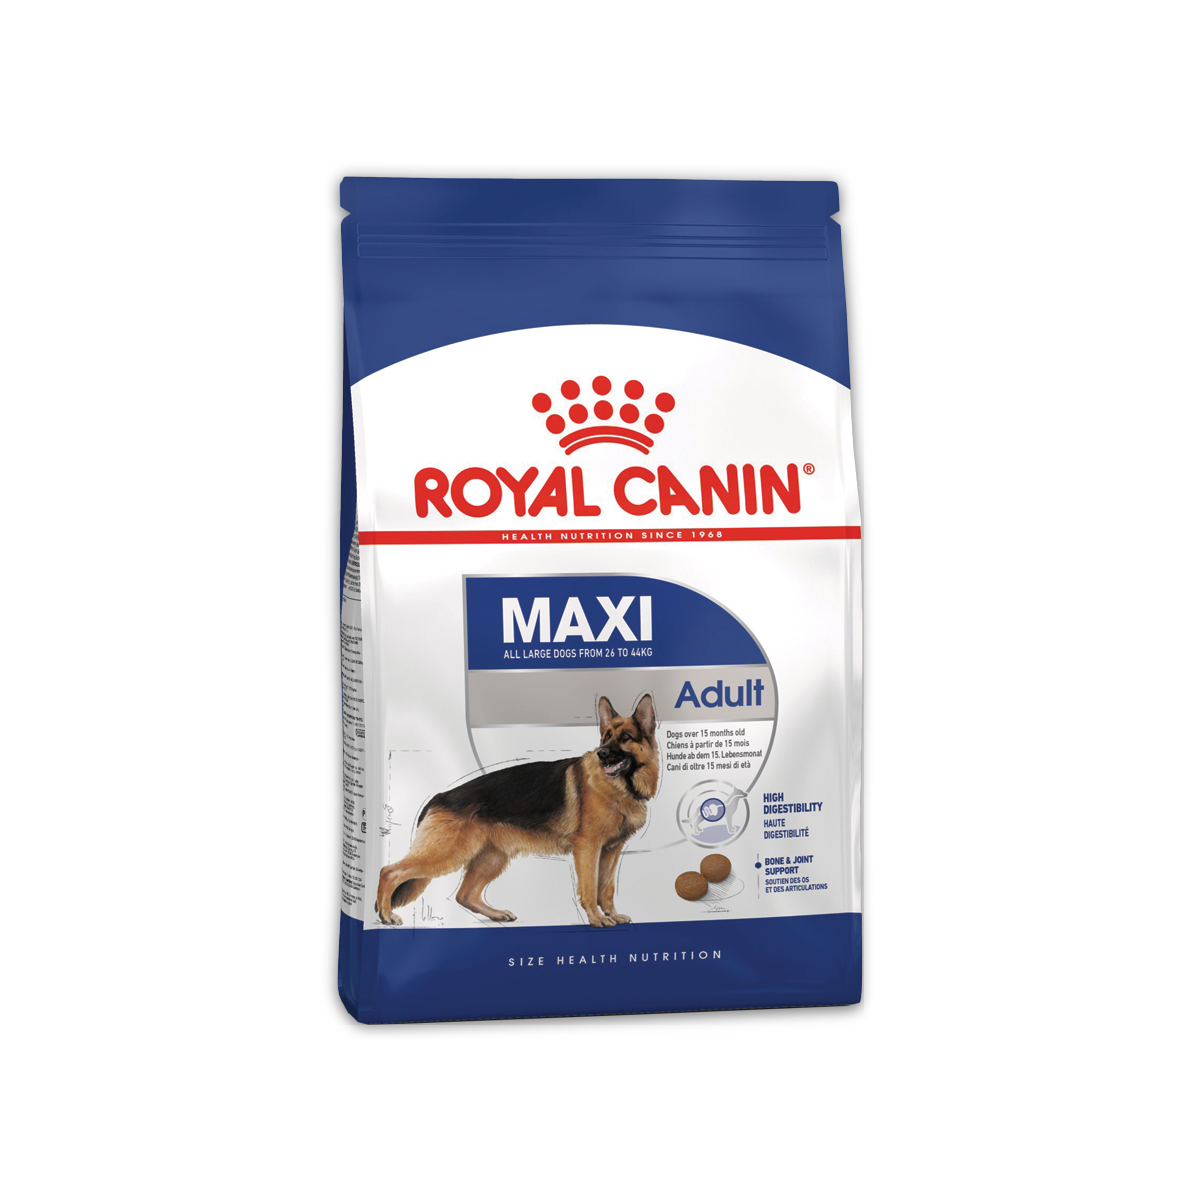 Royal Canin Maxi Adult โรยัล คานิน อาหารสำหรับสุนัขโตพันธุ์ใหญ่อายุ 15 เดือน ถึง 5 ปี